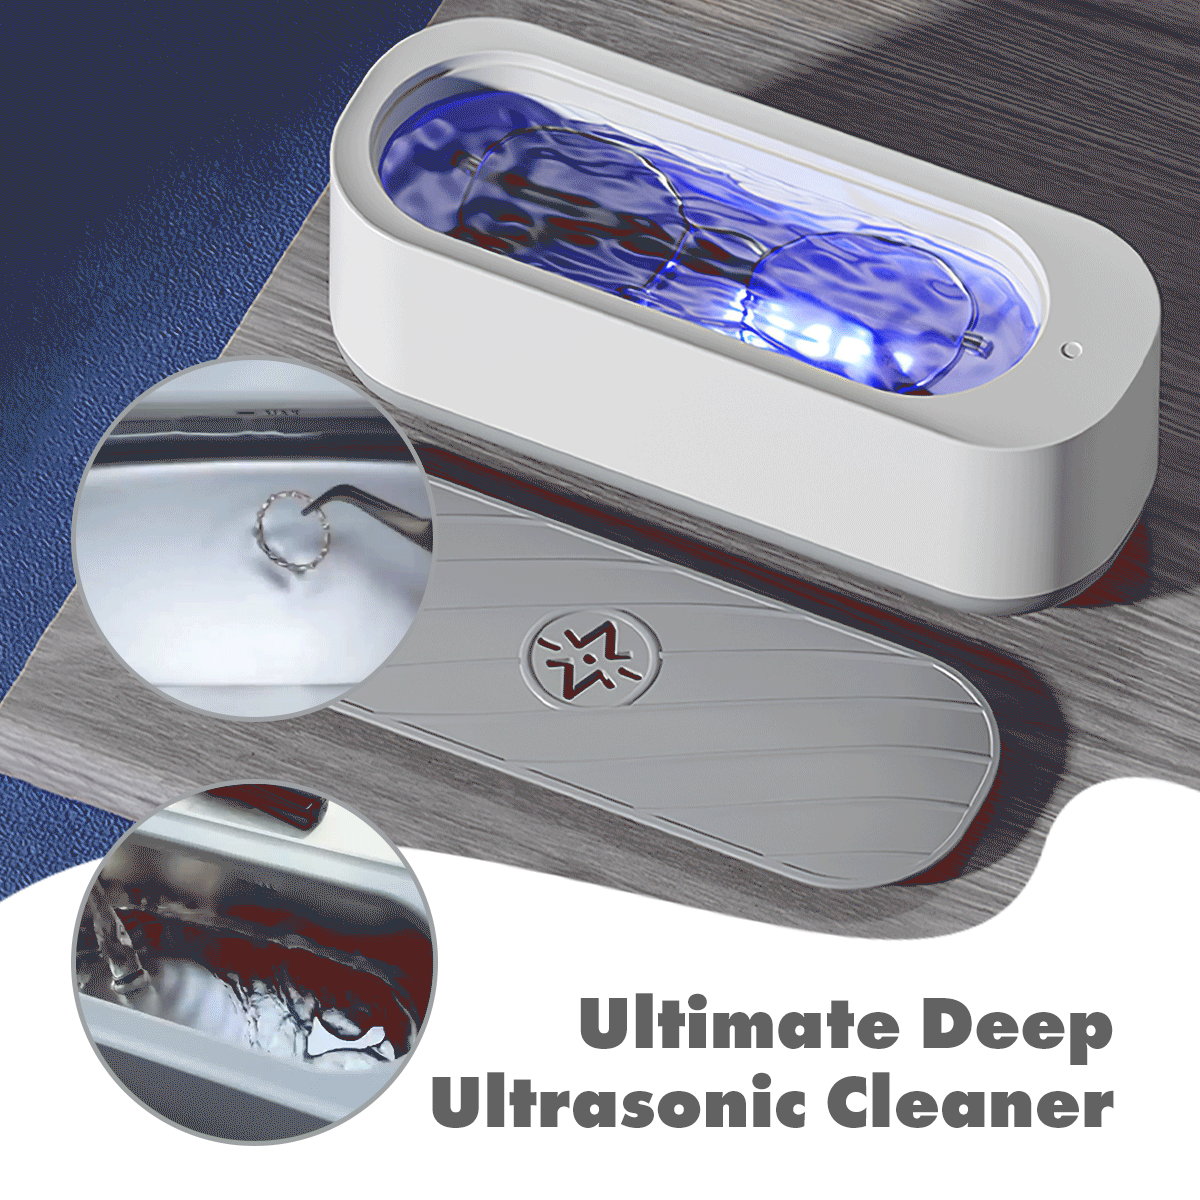 Ultimate Deep Ultrasonic Cleaner